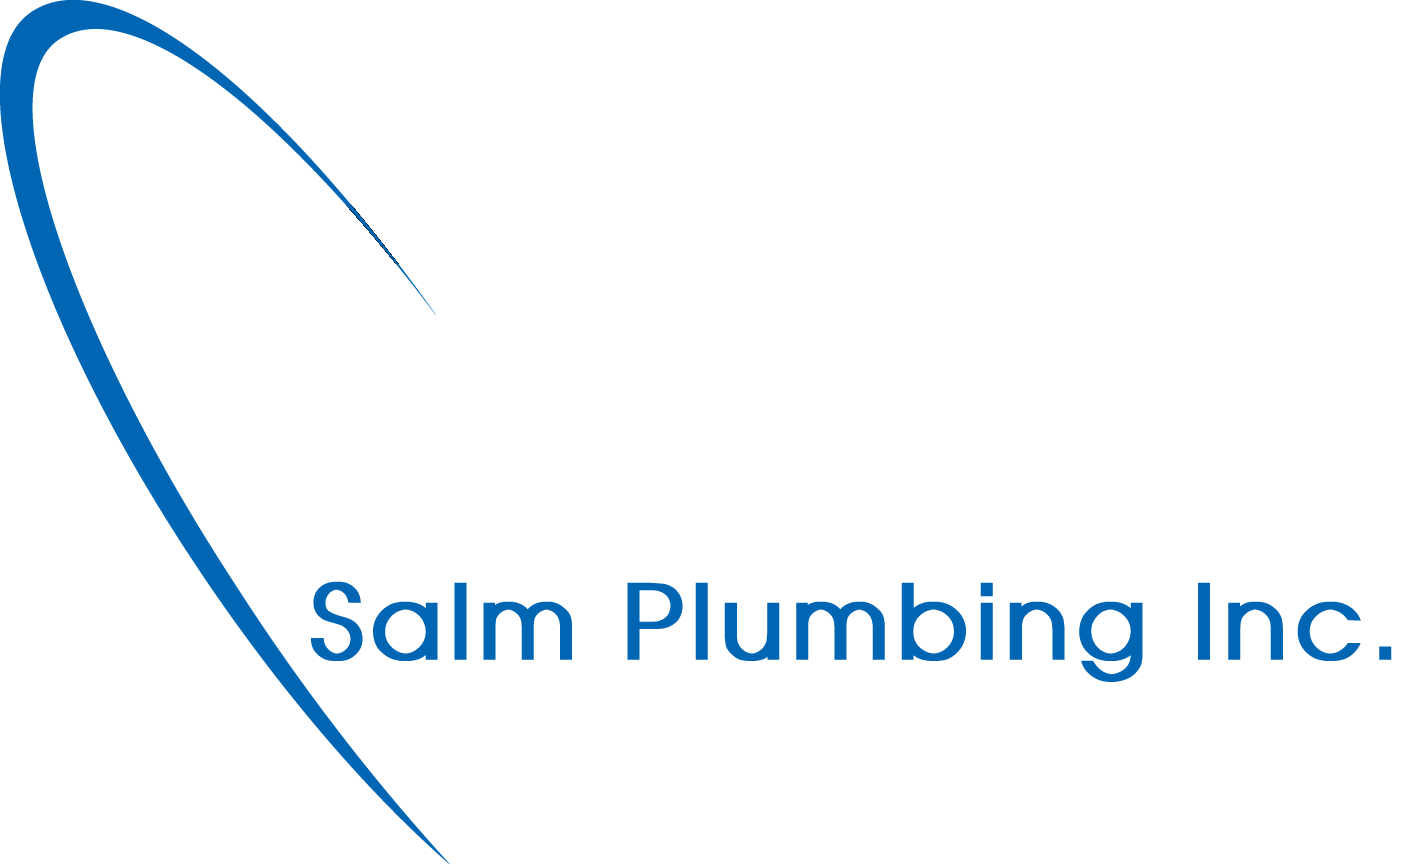 Salm Plumbing